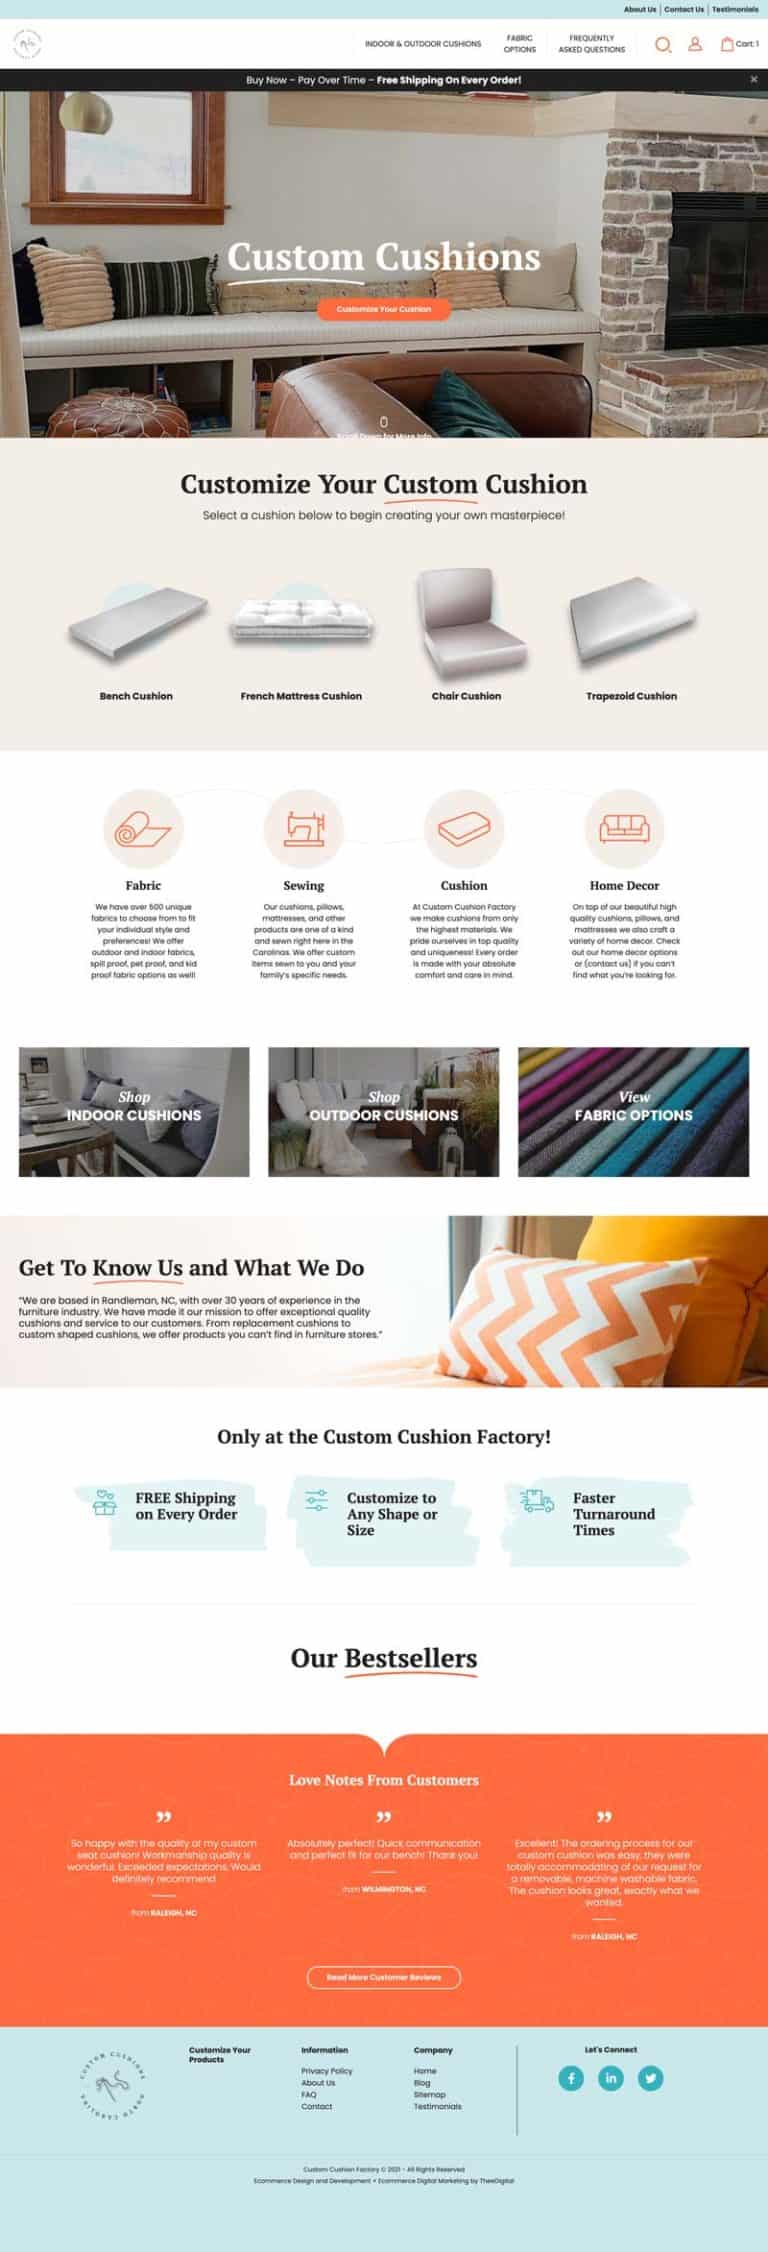 Custom Web Design for a Retail Furniture Company